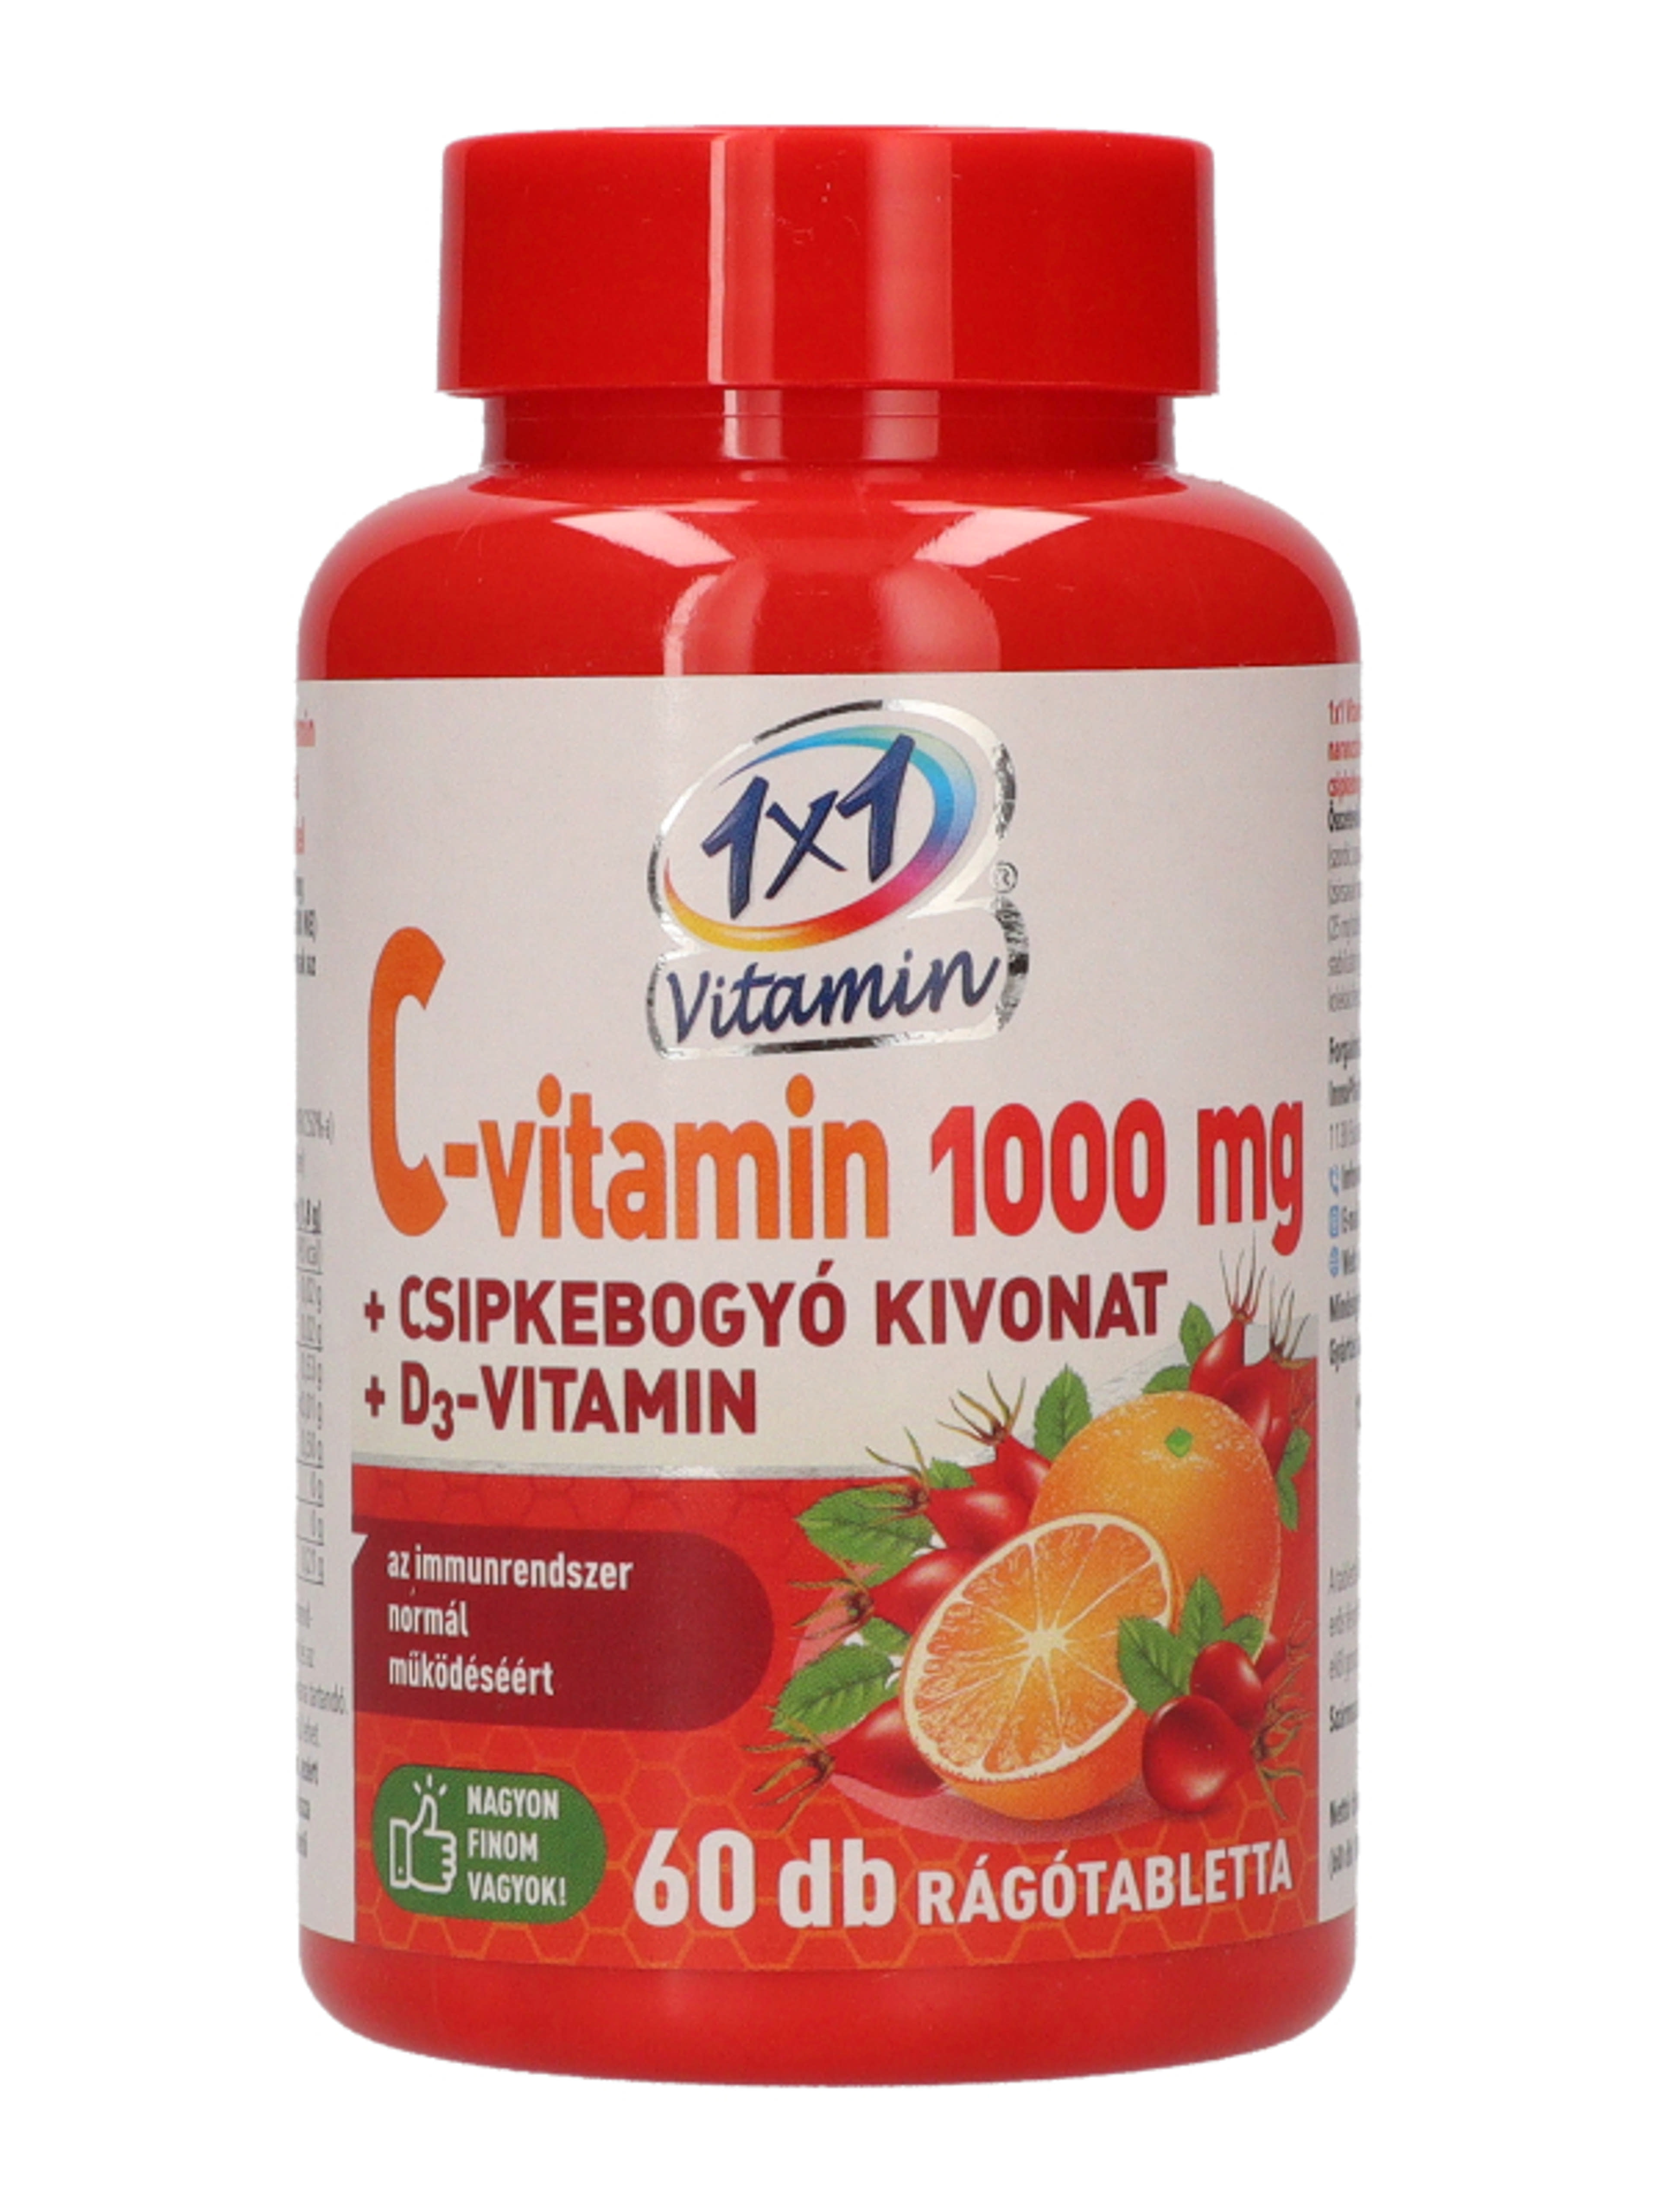 1x1 Vitamin C-Vitamin 1000mg+ D3+ rágótabletta csipkebogyóval - 60 db-1